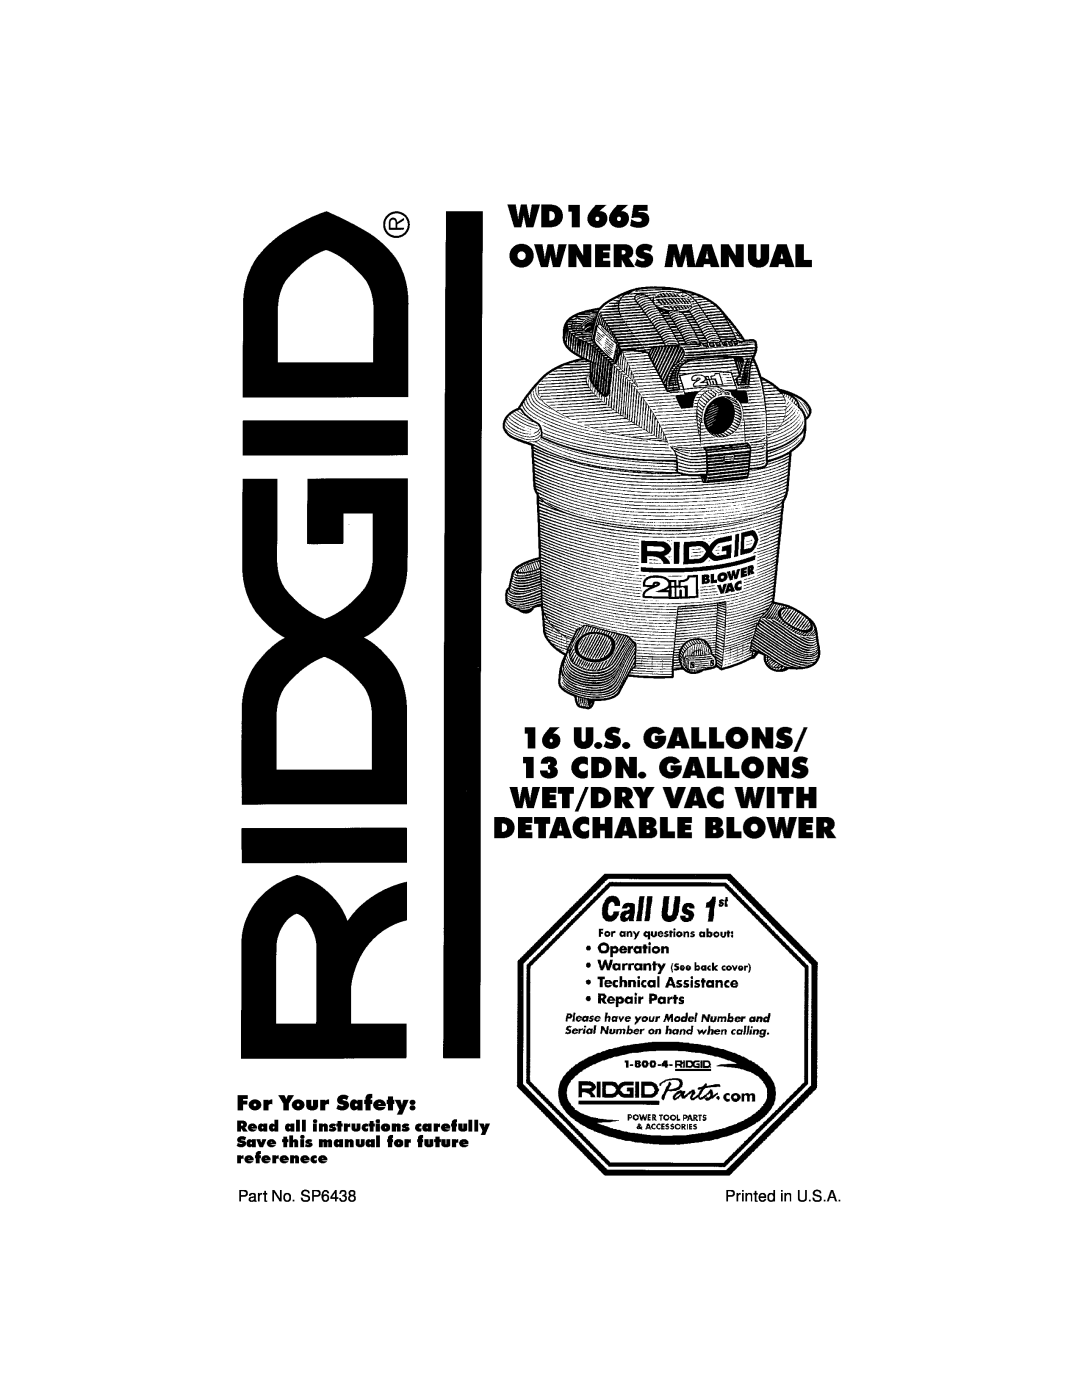 RIDGID WD1665 manual 